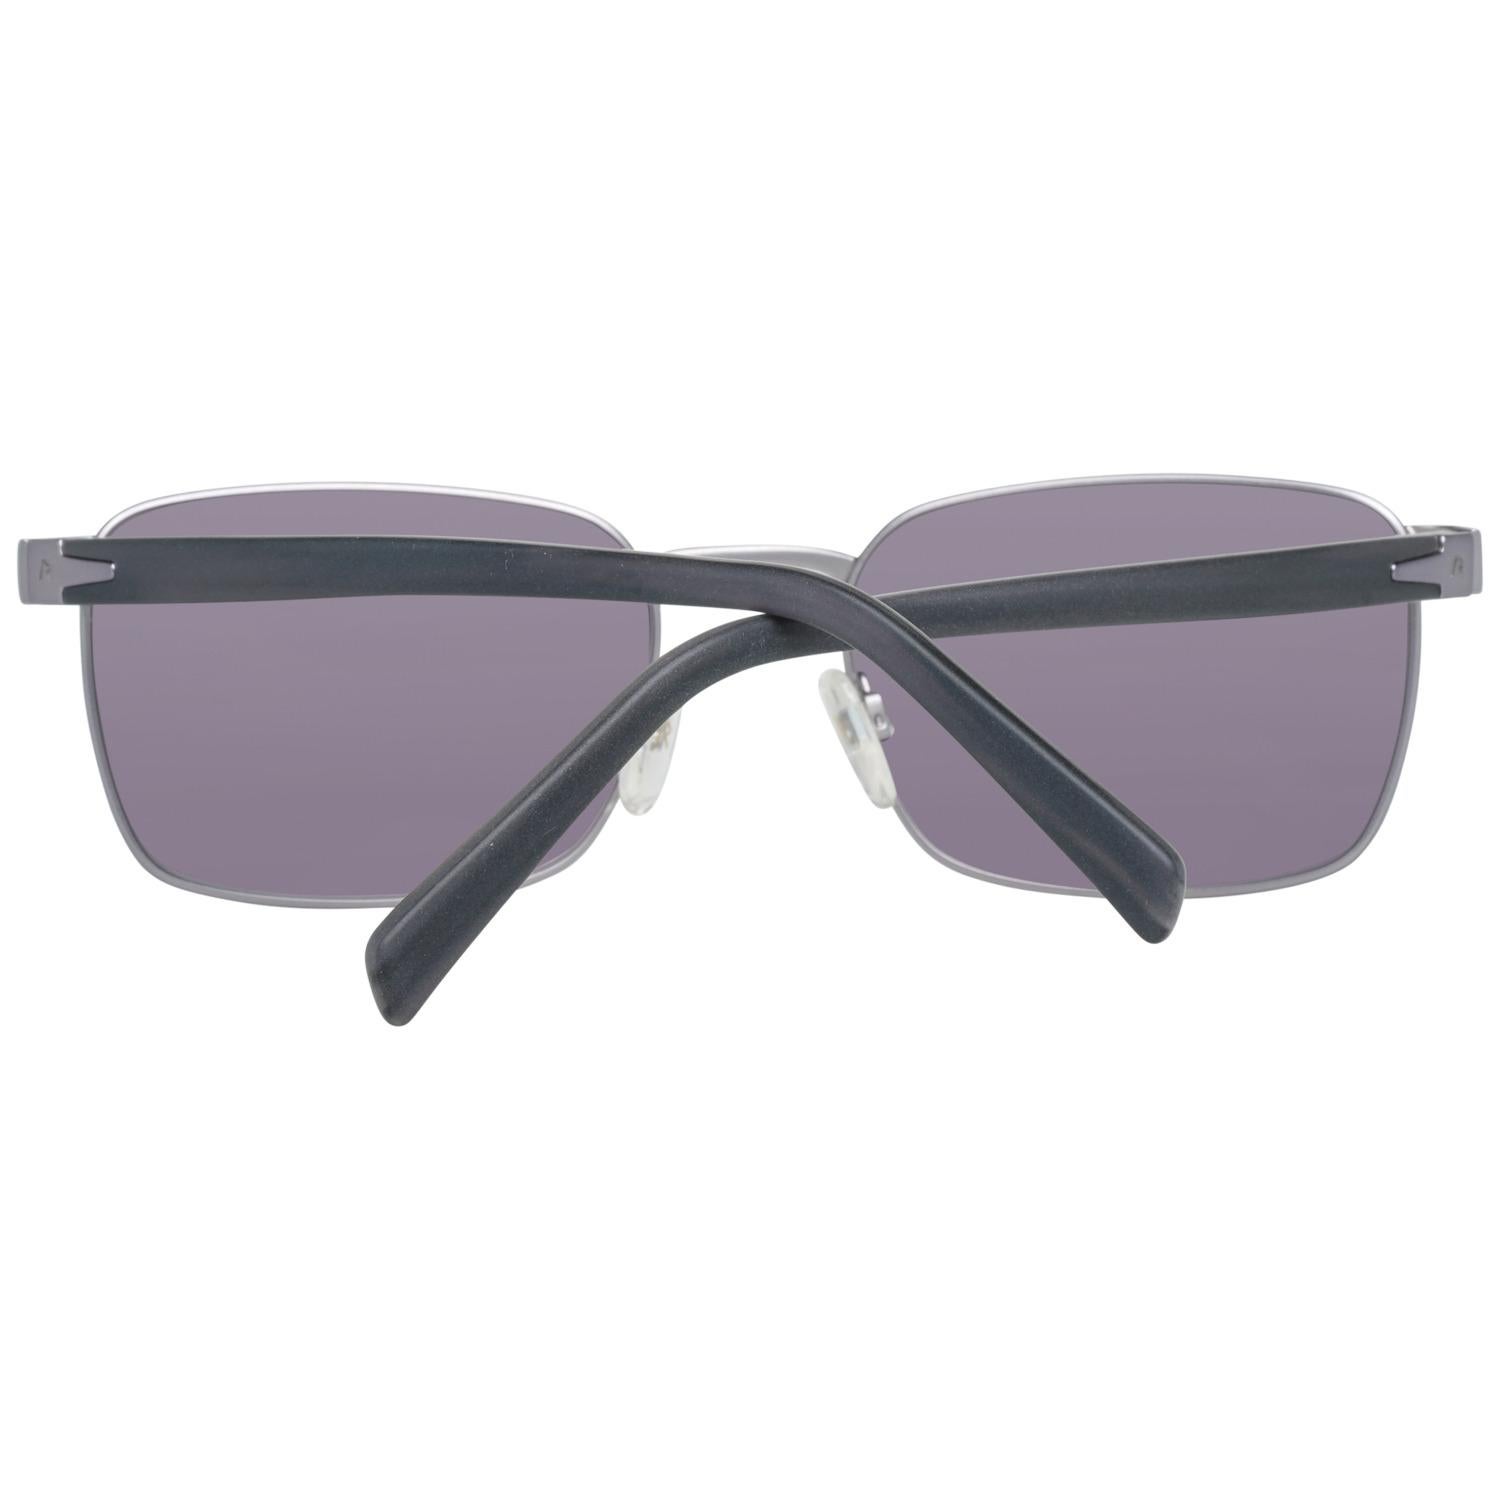 Rodenstock Mint Unisex Silver Sunglasses R1417 D 56 56-19-140 mm 3